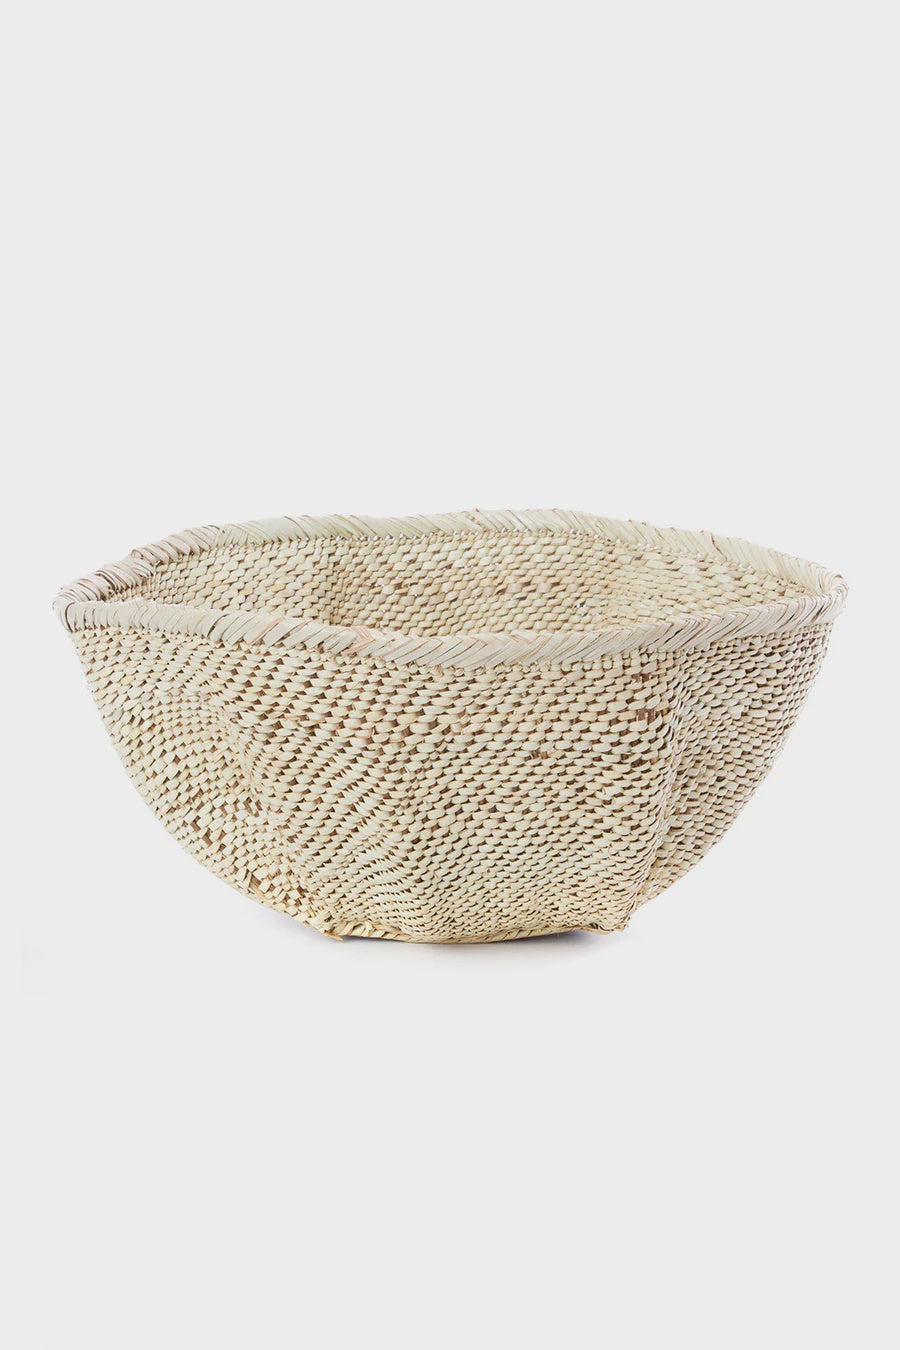 BoTanga Hand Woven Basket-One of a kind